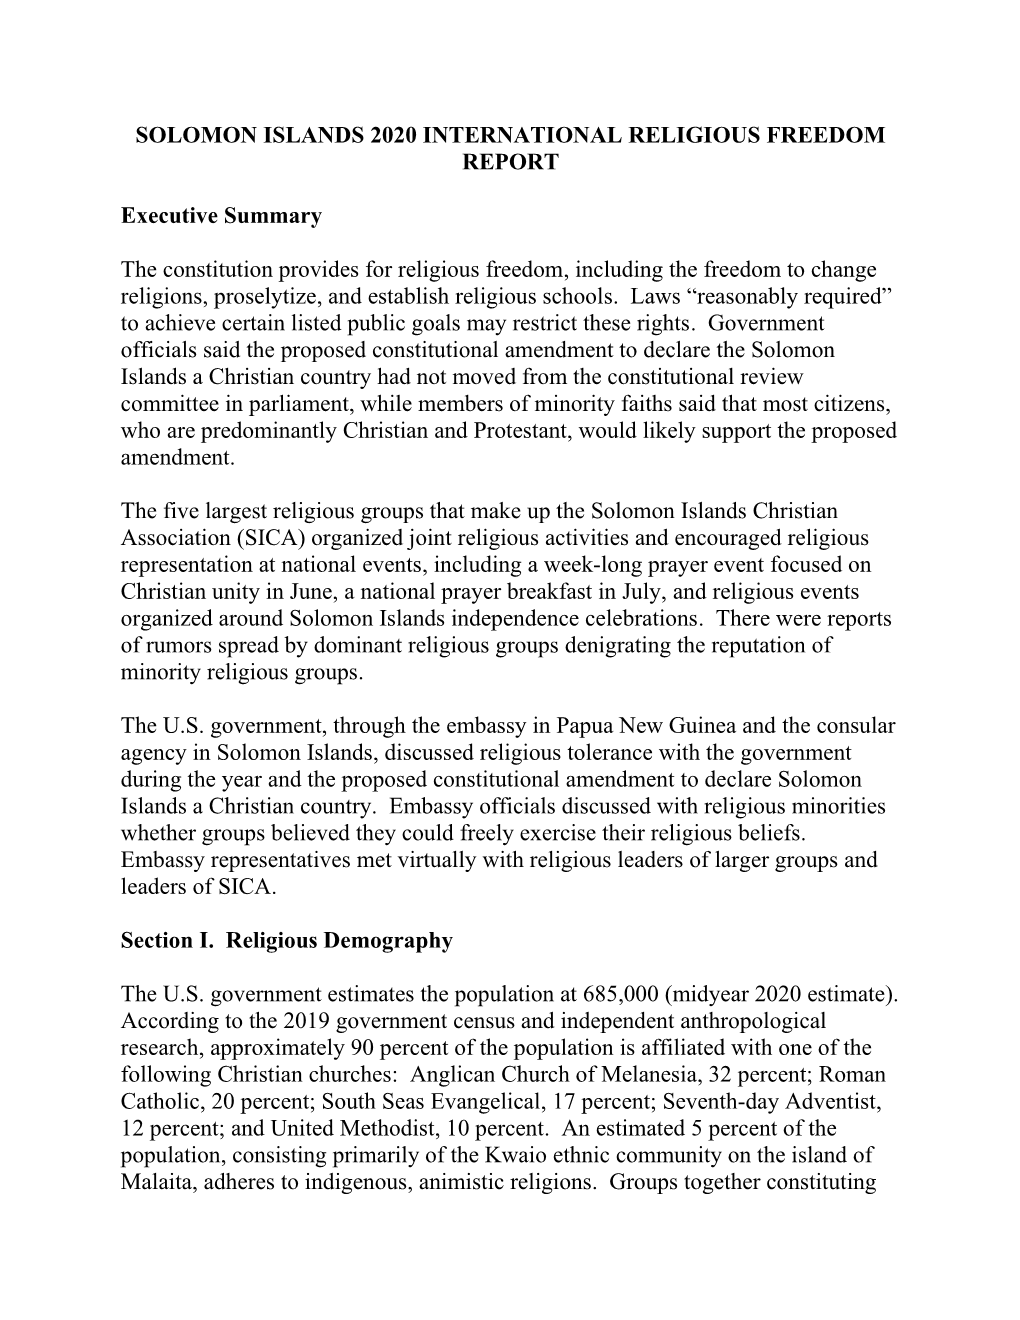 Solomon Islands 2020 International Religious Freedom Report